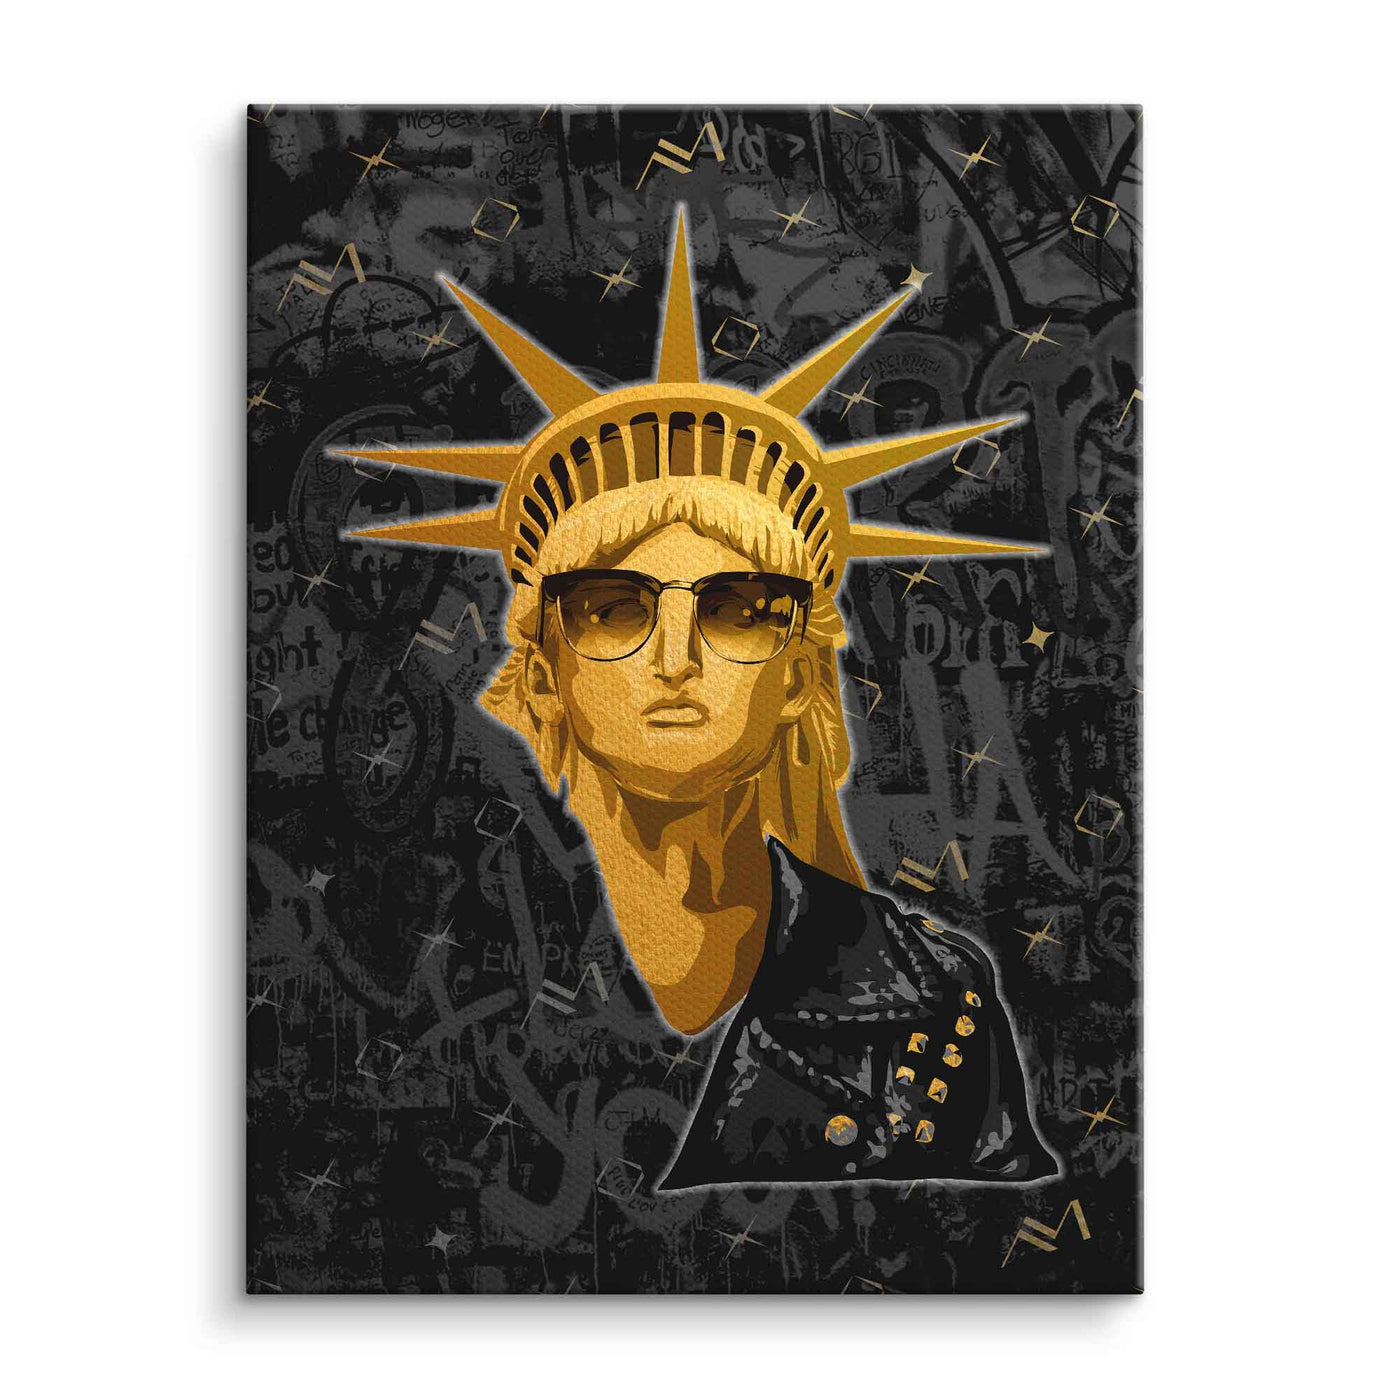 Golden Statue of Liberty